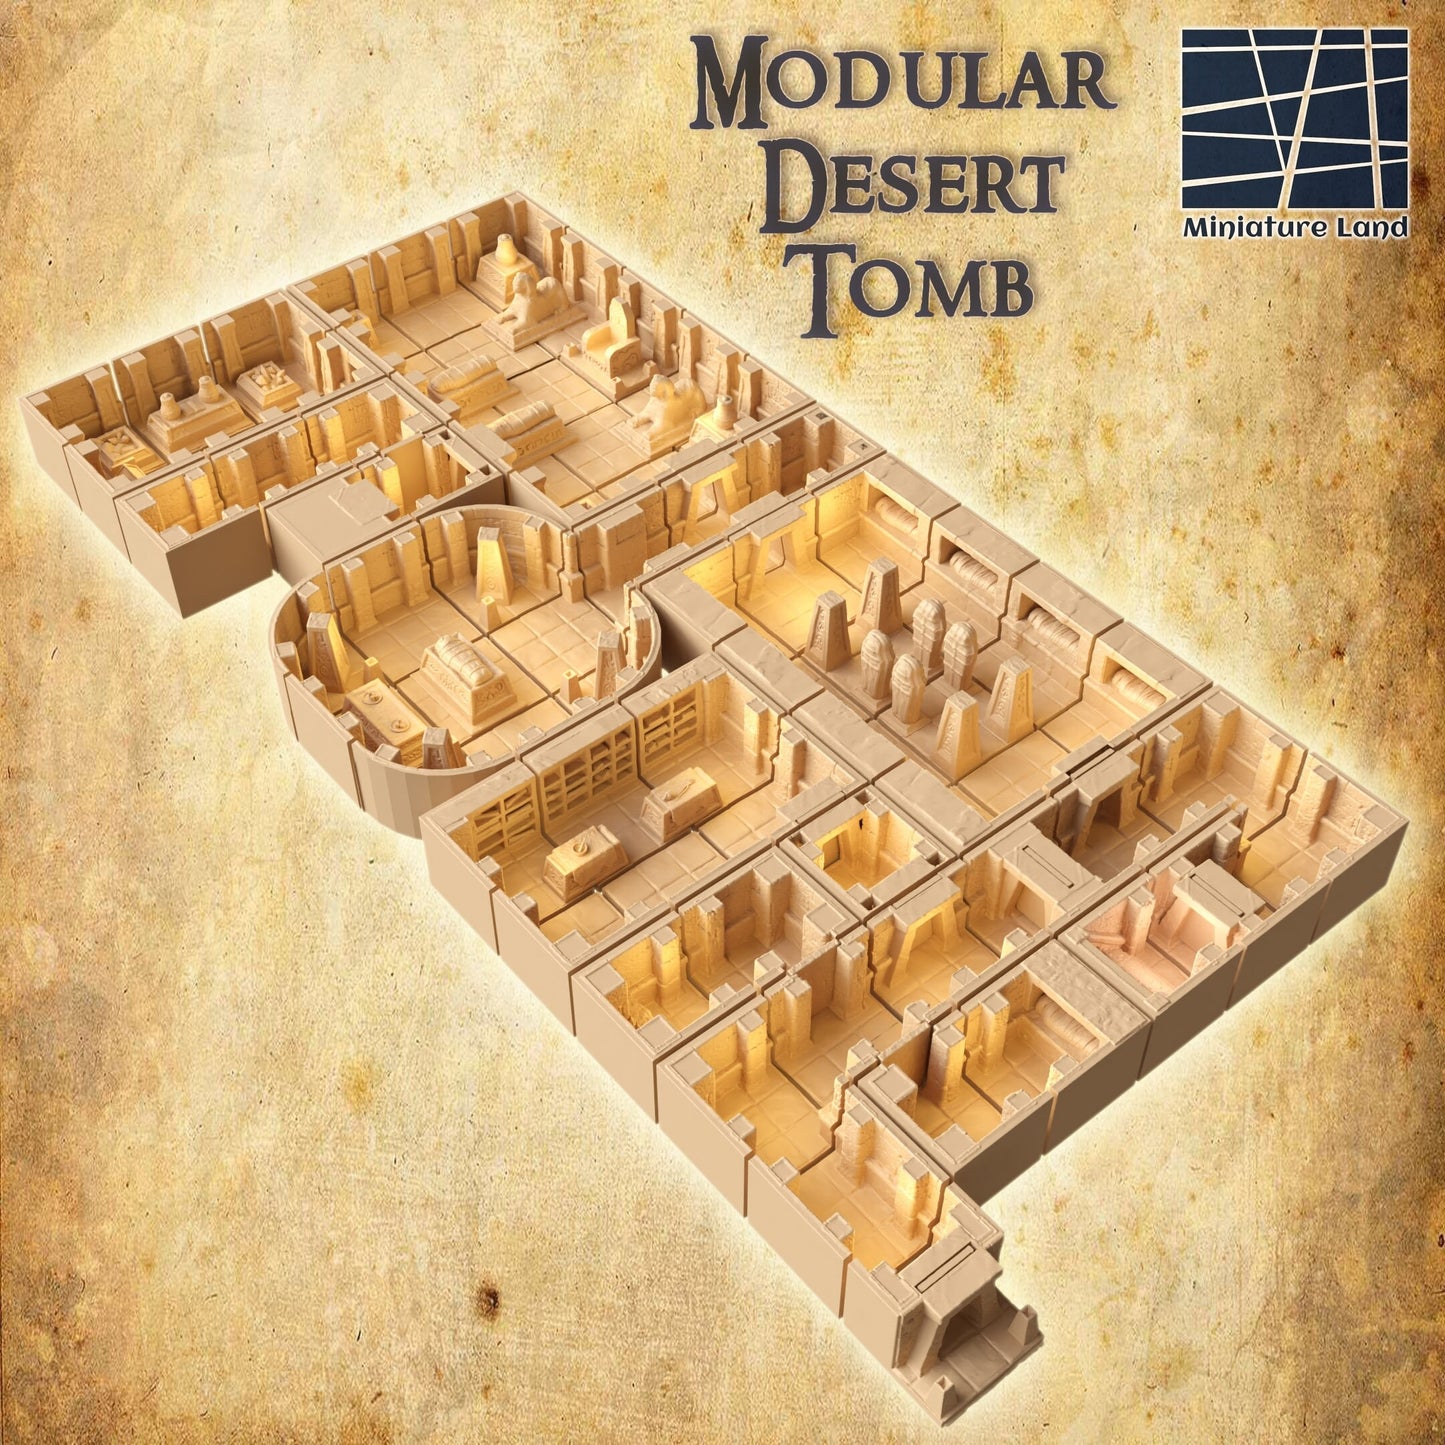 Modular Desert Tomb